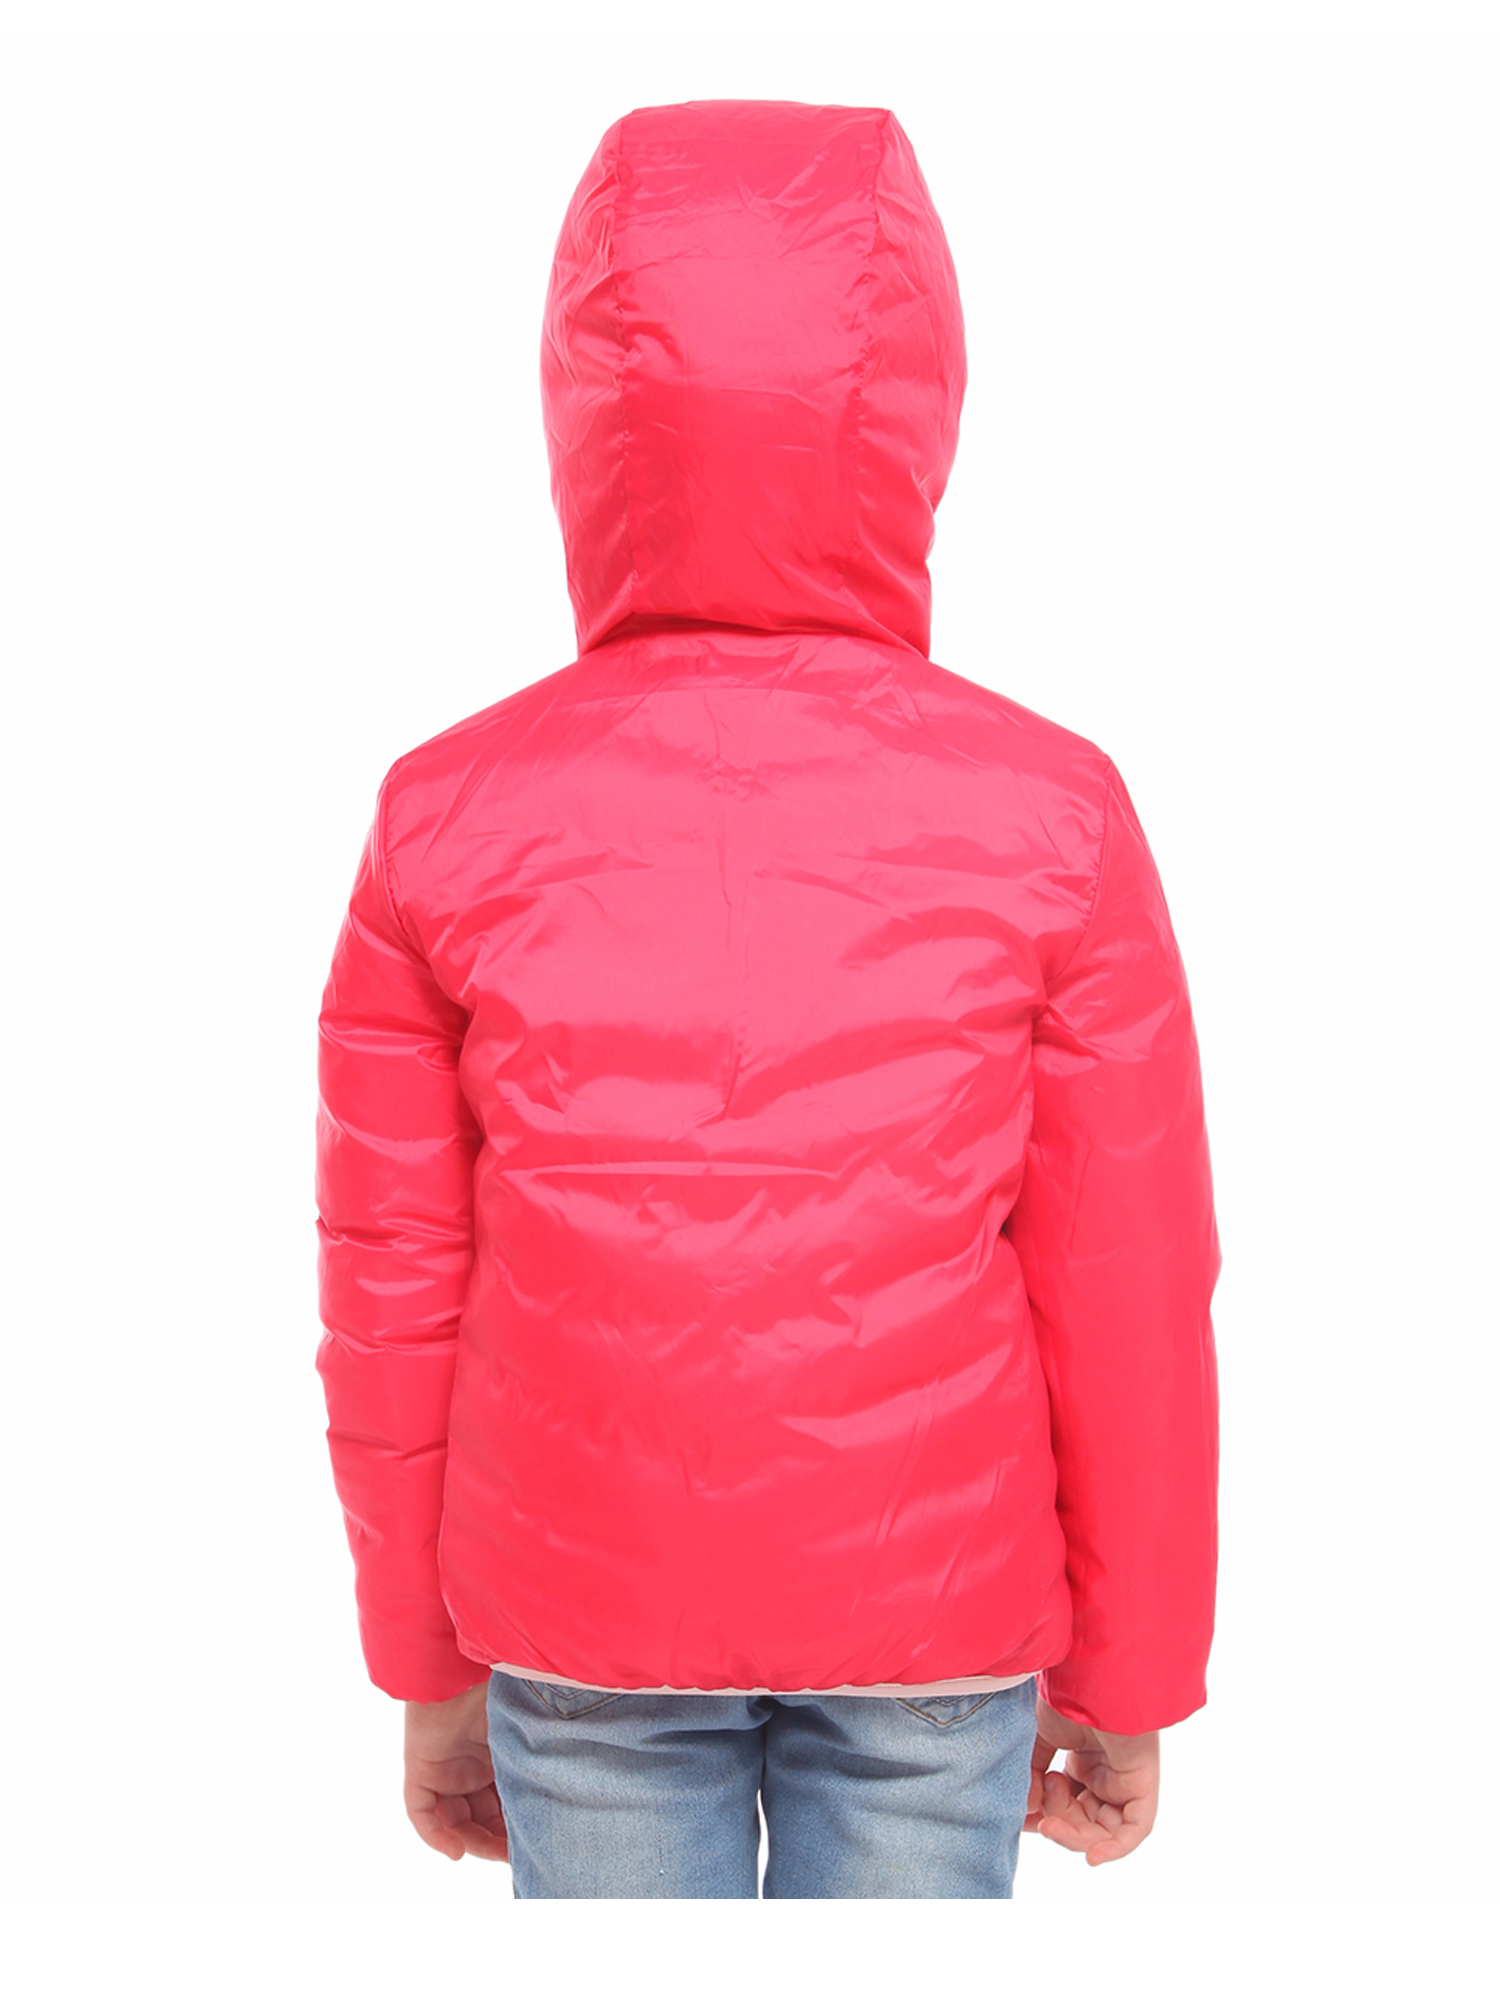 Rokka&Rolla Girls' Reversible Light Puffer Jacket Coat, Sizes 4-18 - image 5 of 9